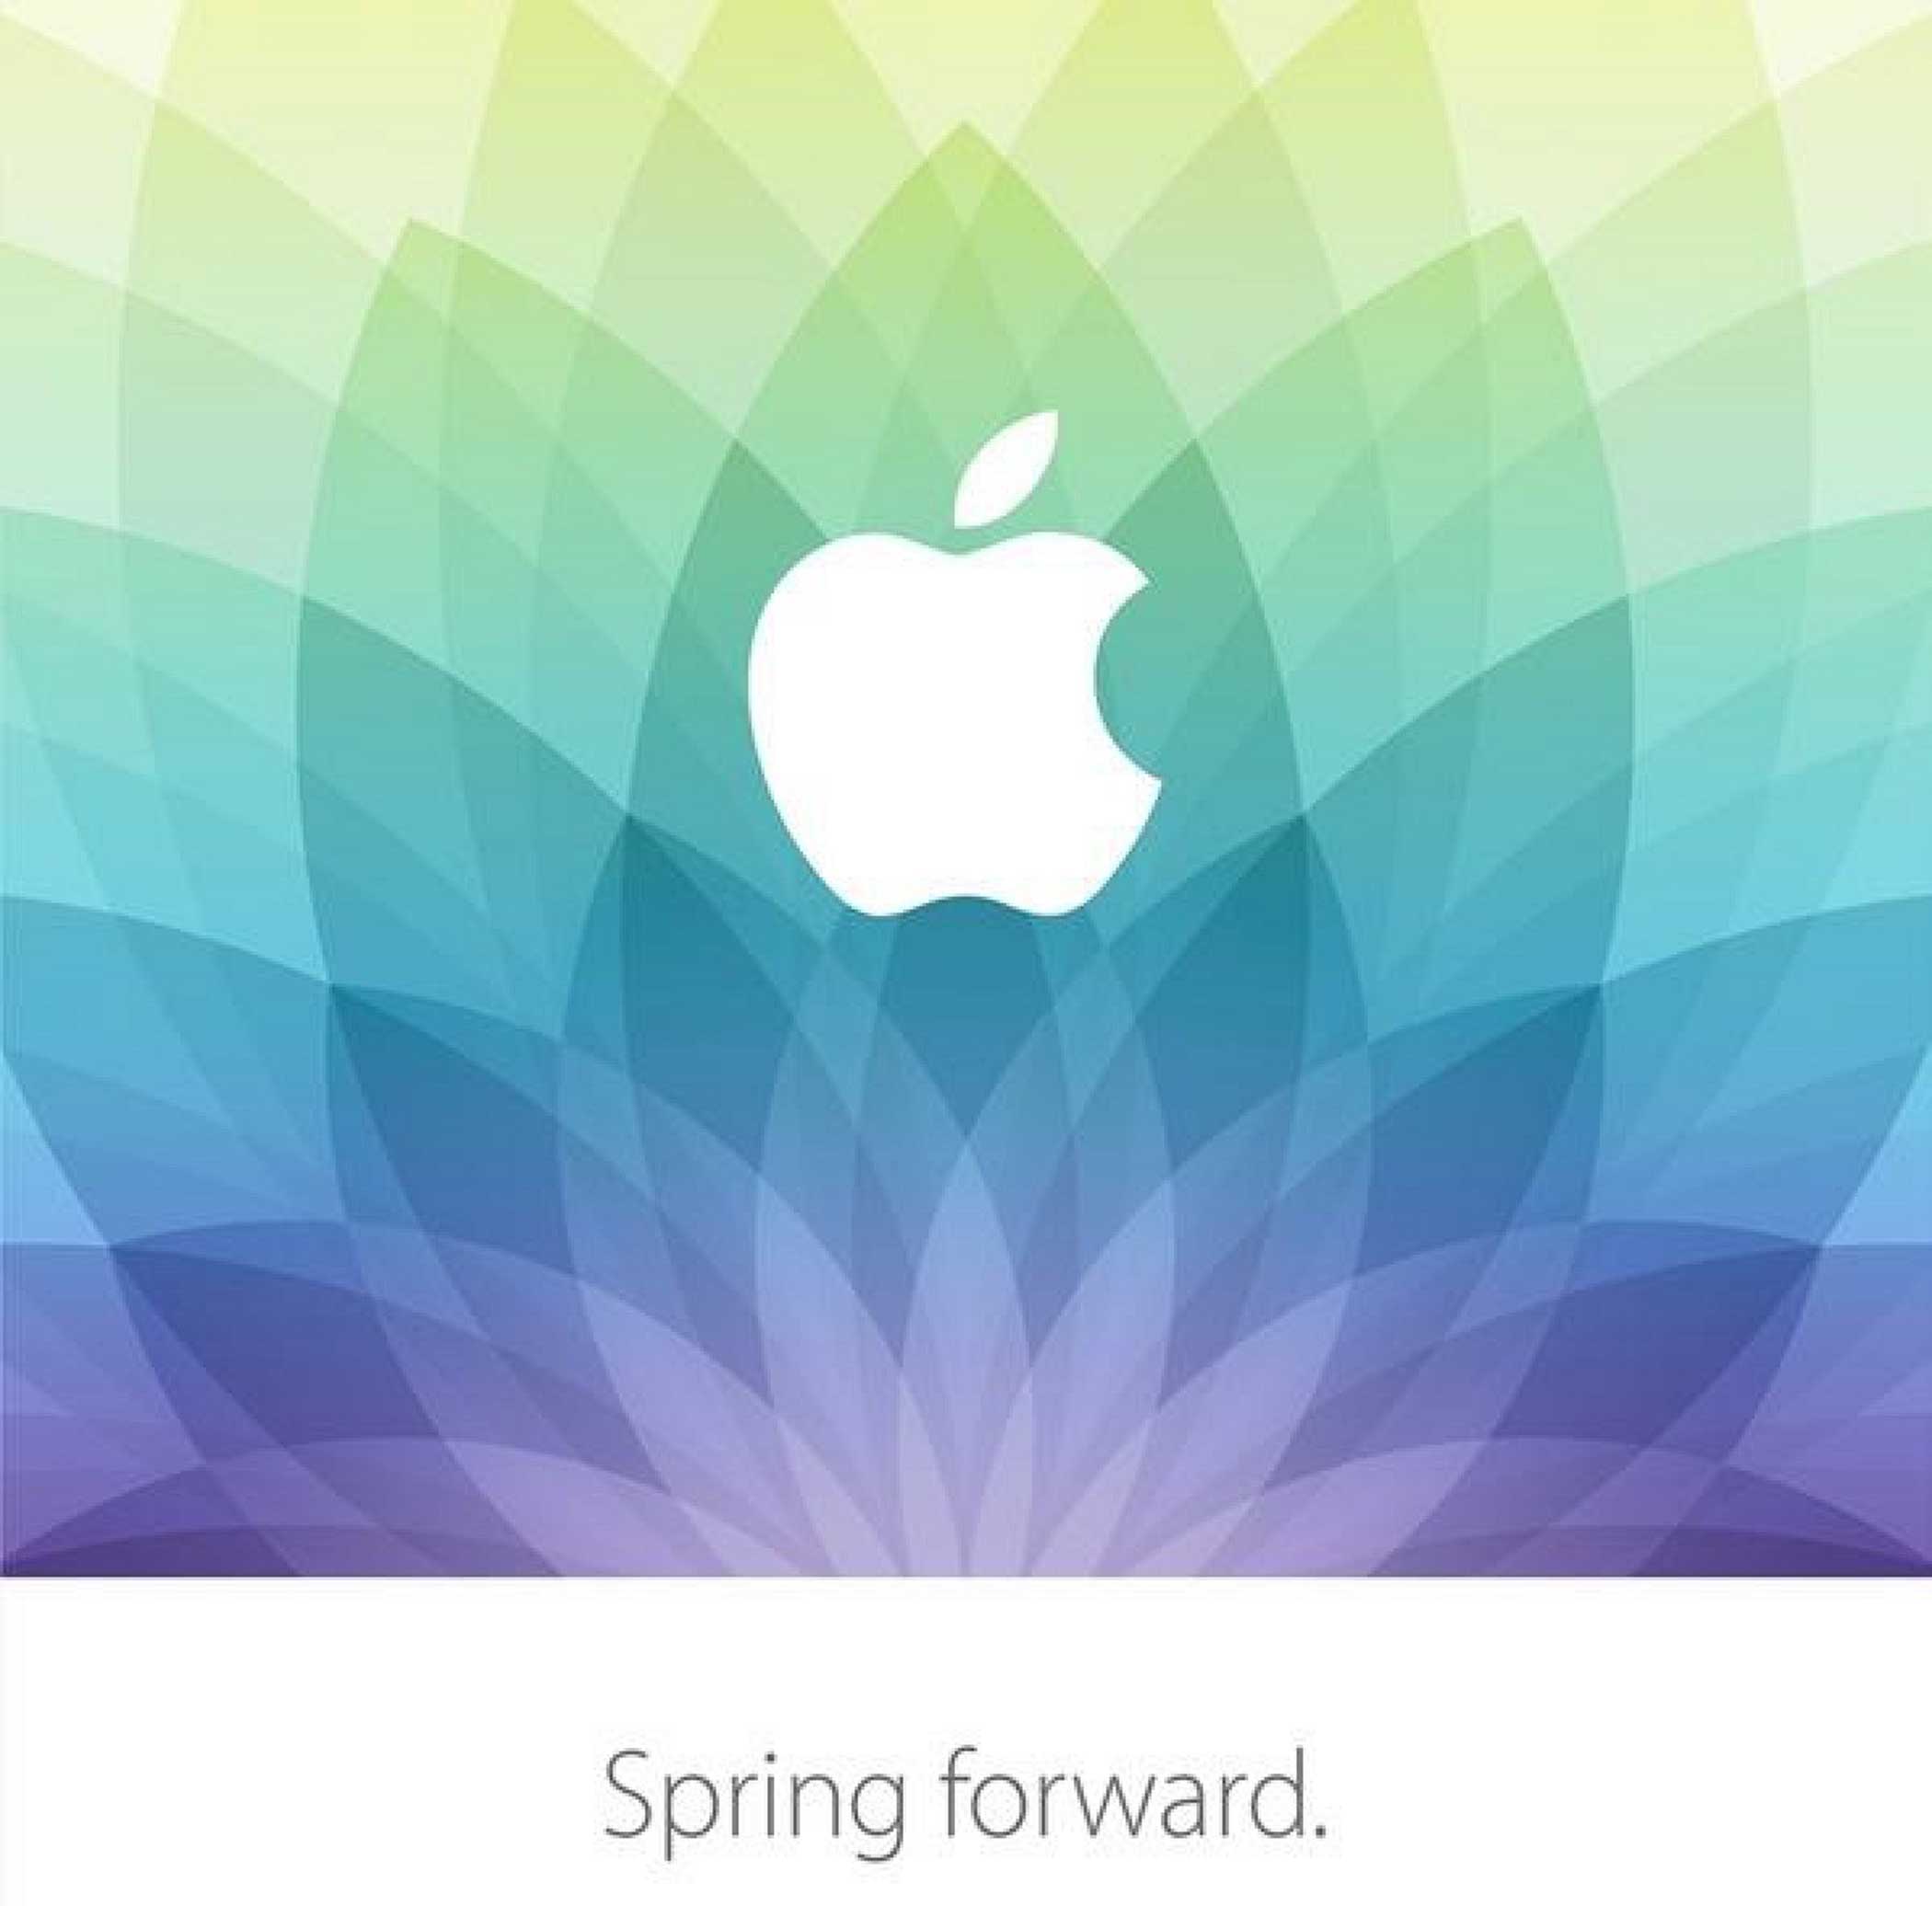 Apple Watch, March 2015, Cupertino